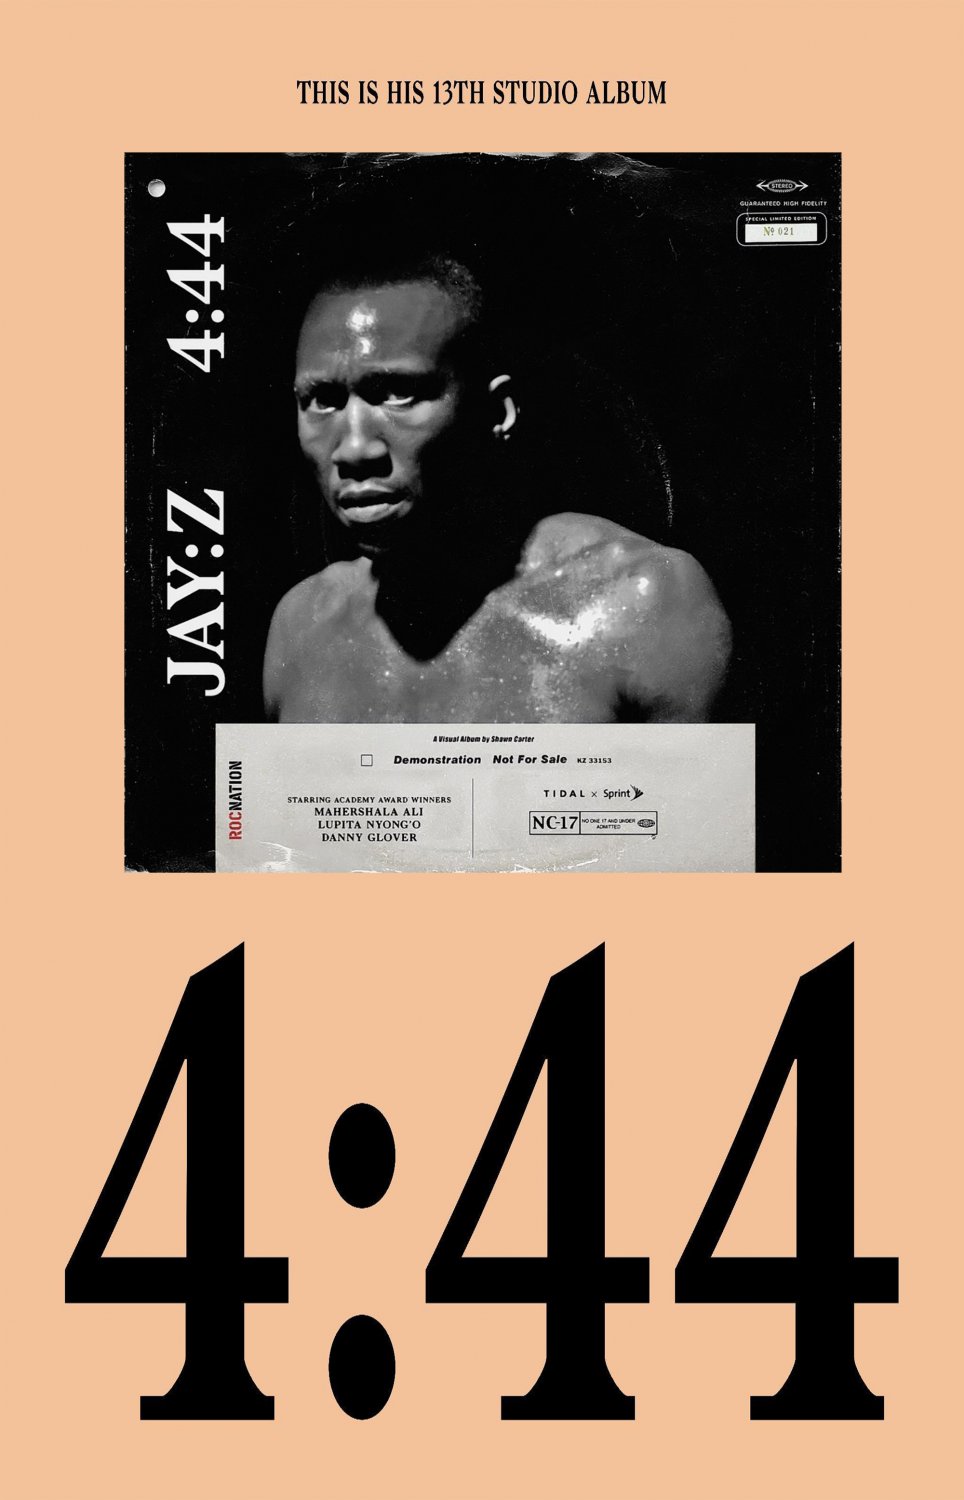 JAY-Z 4:44 Album 13"x19" (32cm/49cm) Poster